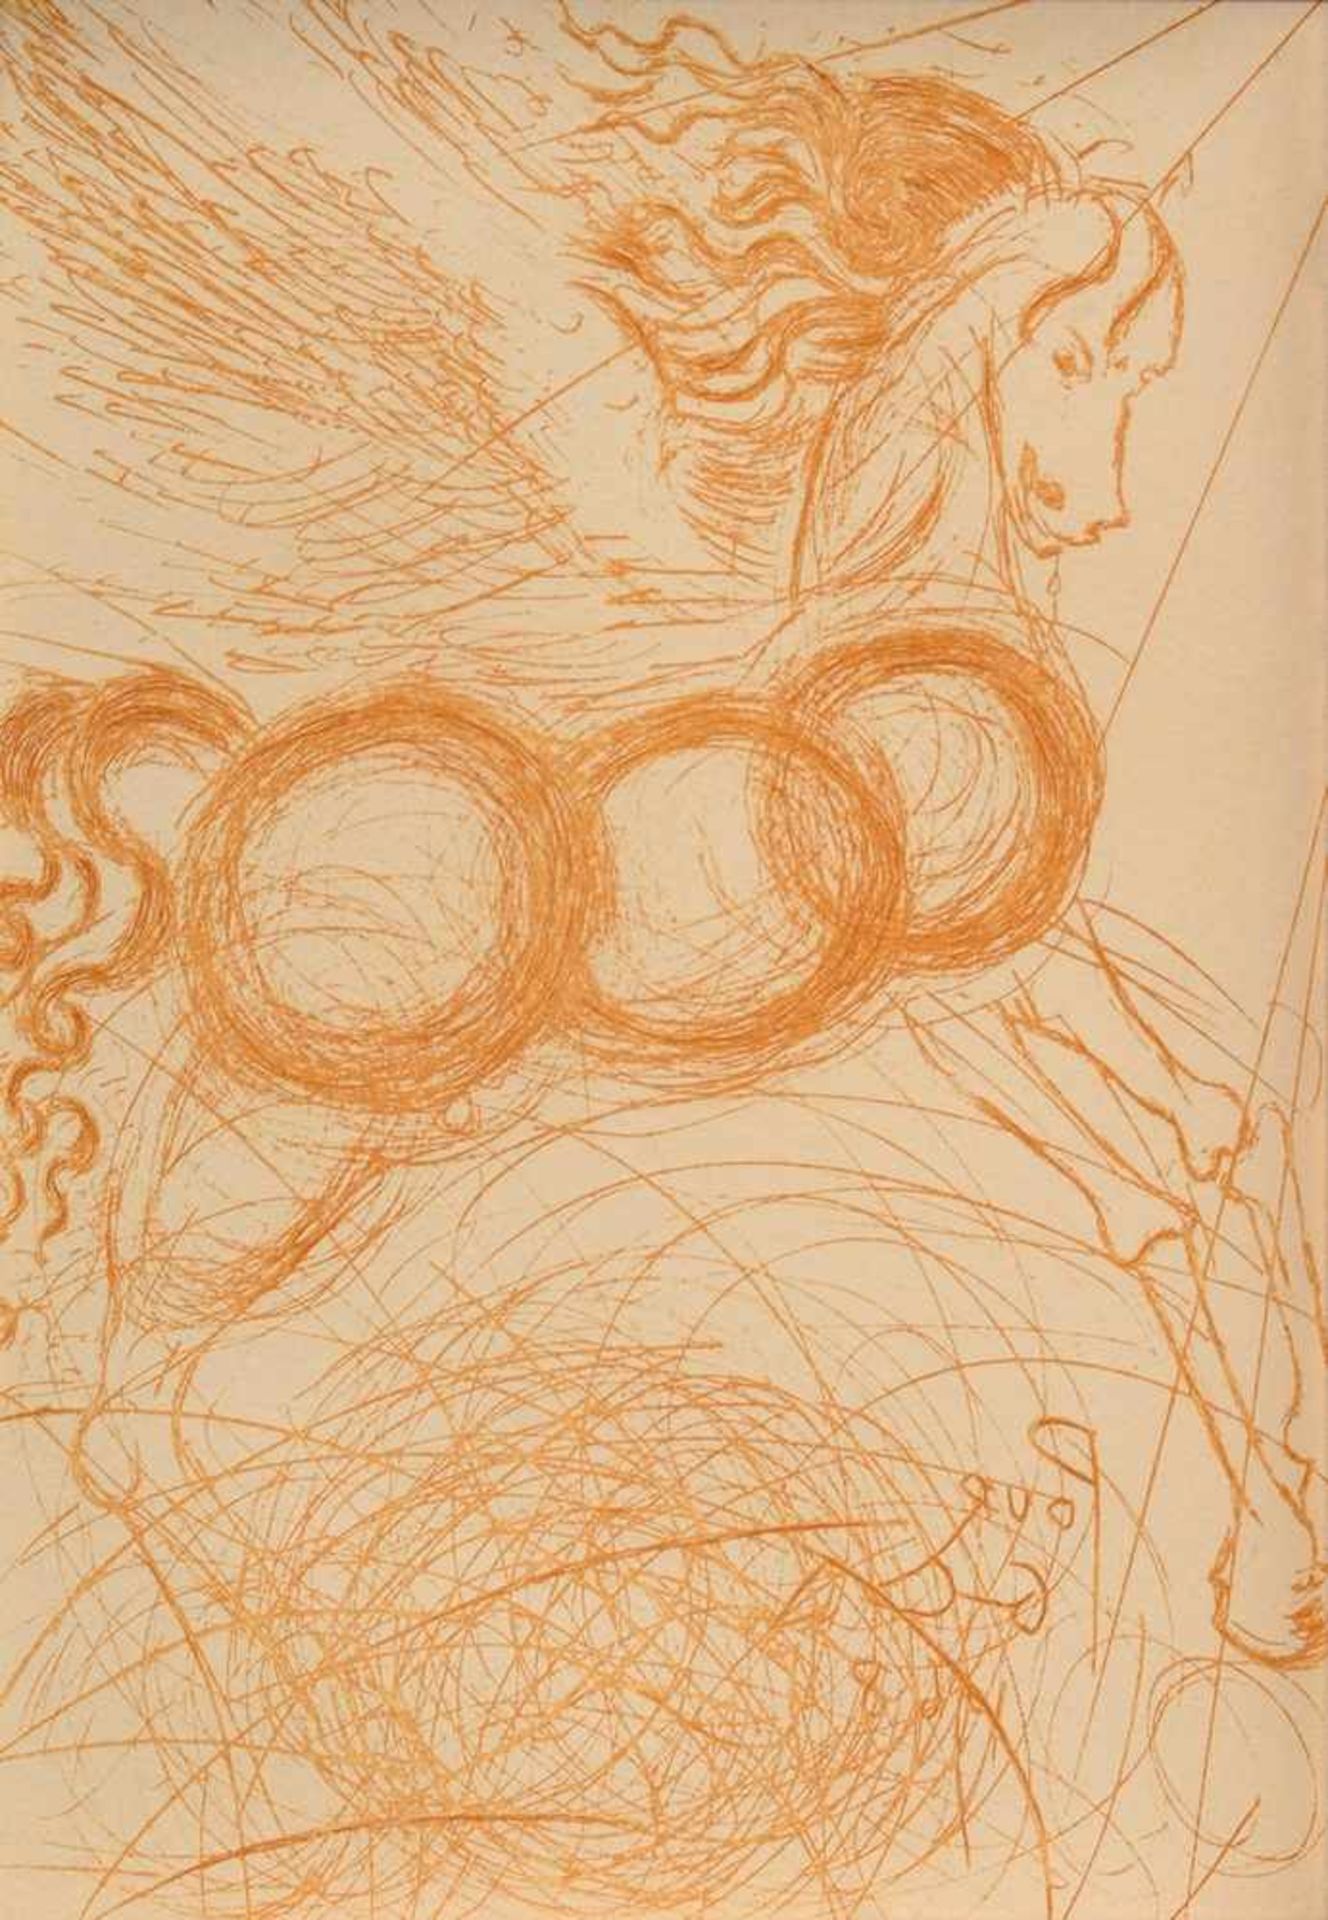 Dali, Salvador (1904-1989) „Pegasus“, Sepiaradierung, 16,5x11,5cm (m.R. 21x16cm), beschnitten,